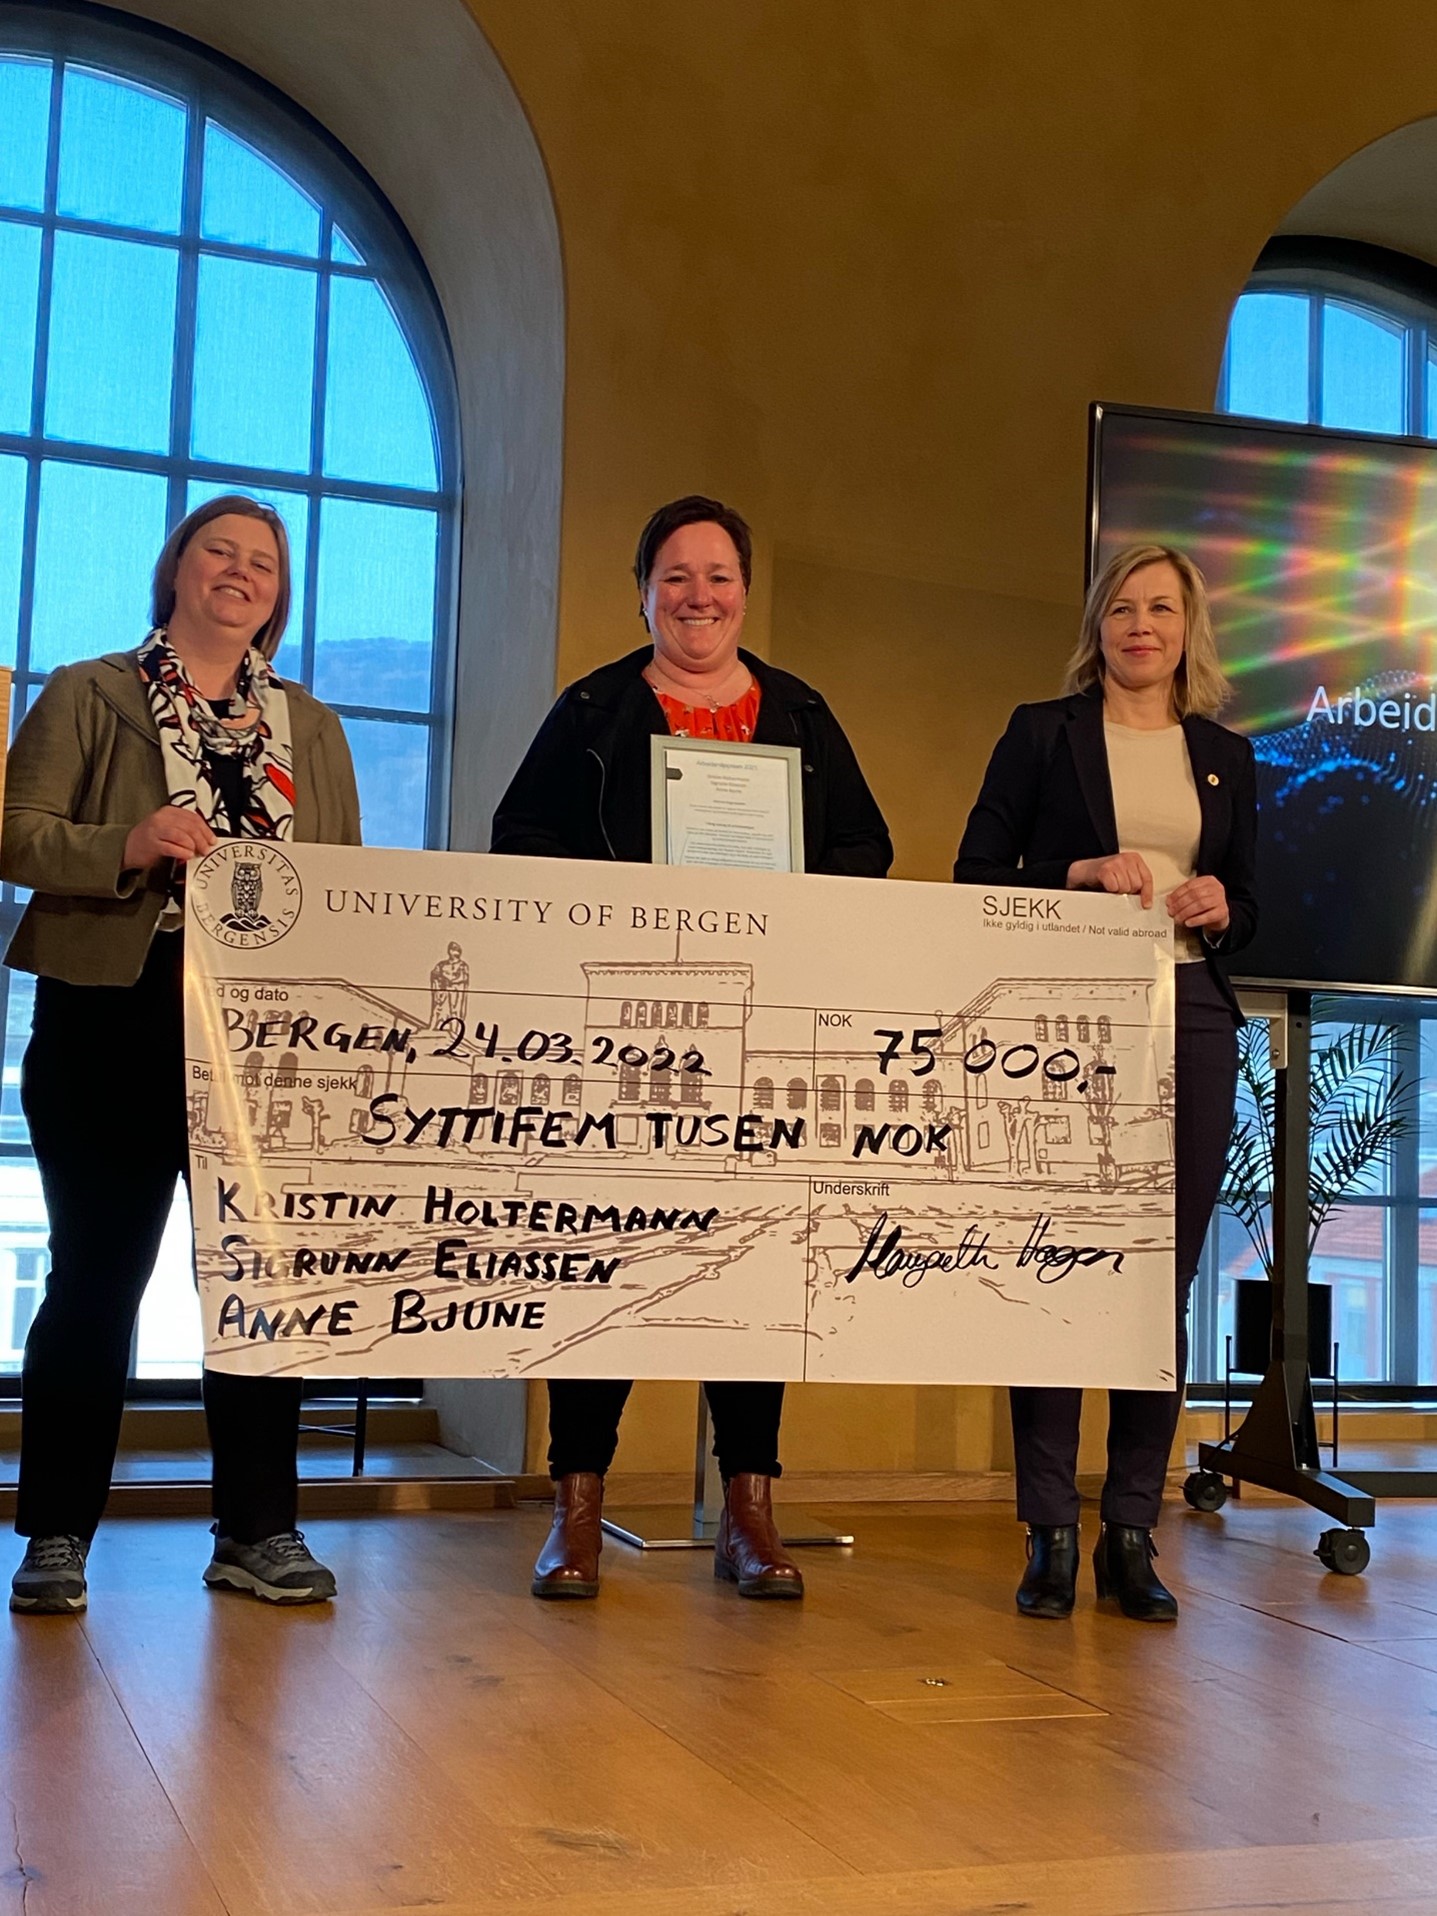 Sigrunn Eliassen, Anne Bjune and Kristin Holtermann show their prize